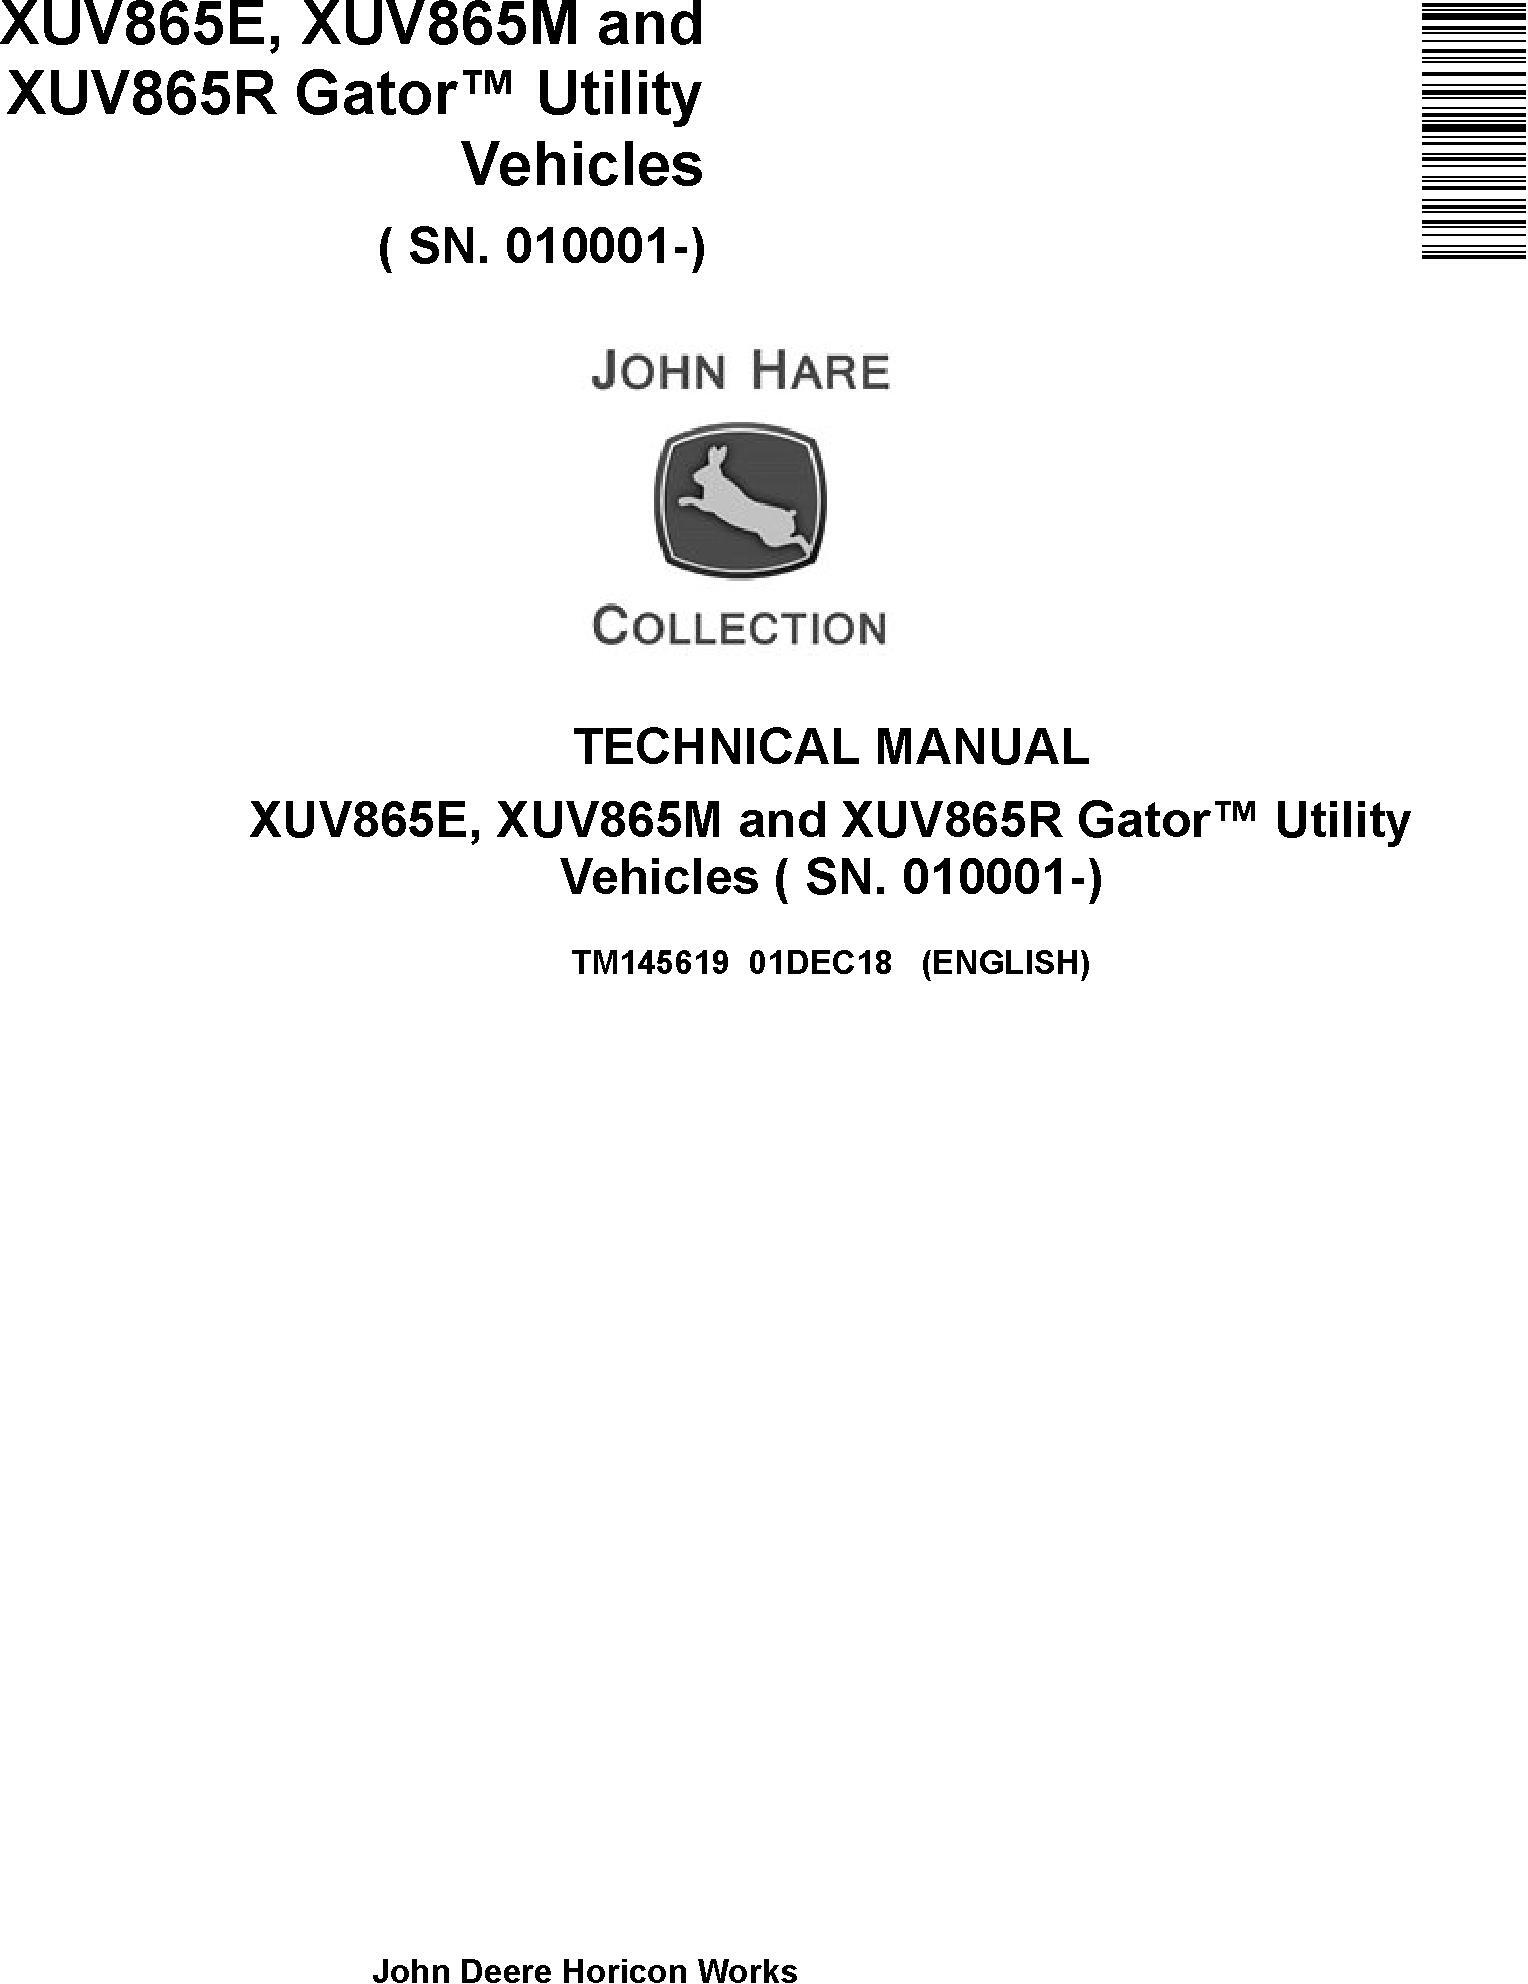 John Deere XUV865E, XUV865M, XUV865R Gator Utility Vehicles (SN.010001-) Technical Manual (TM145619)